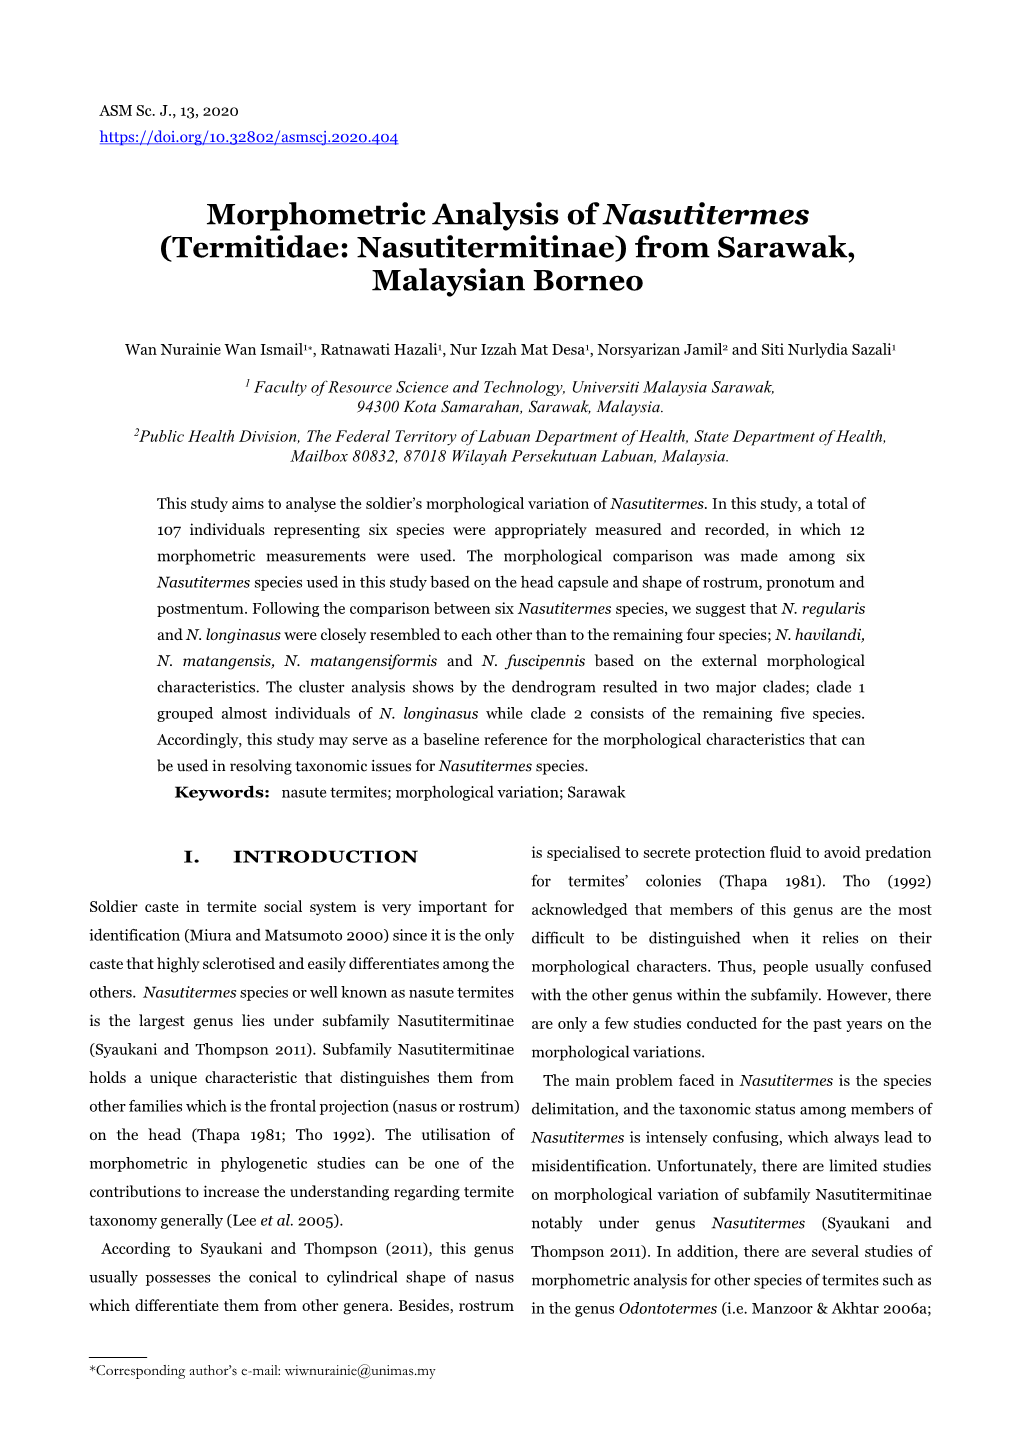 Morphometric Analysis of Nasutitermes (Termitidae: Nasutitermitinae) from Sarawak, Malaysian Borneo